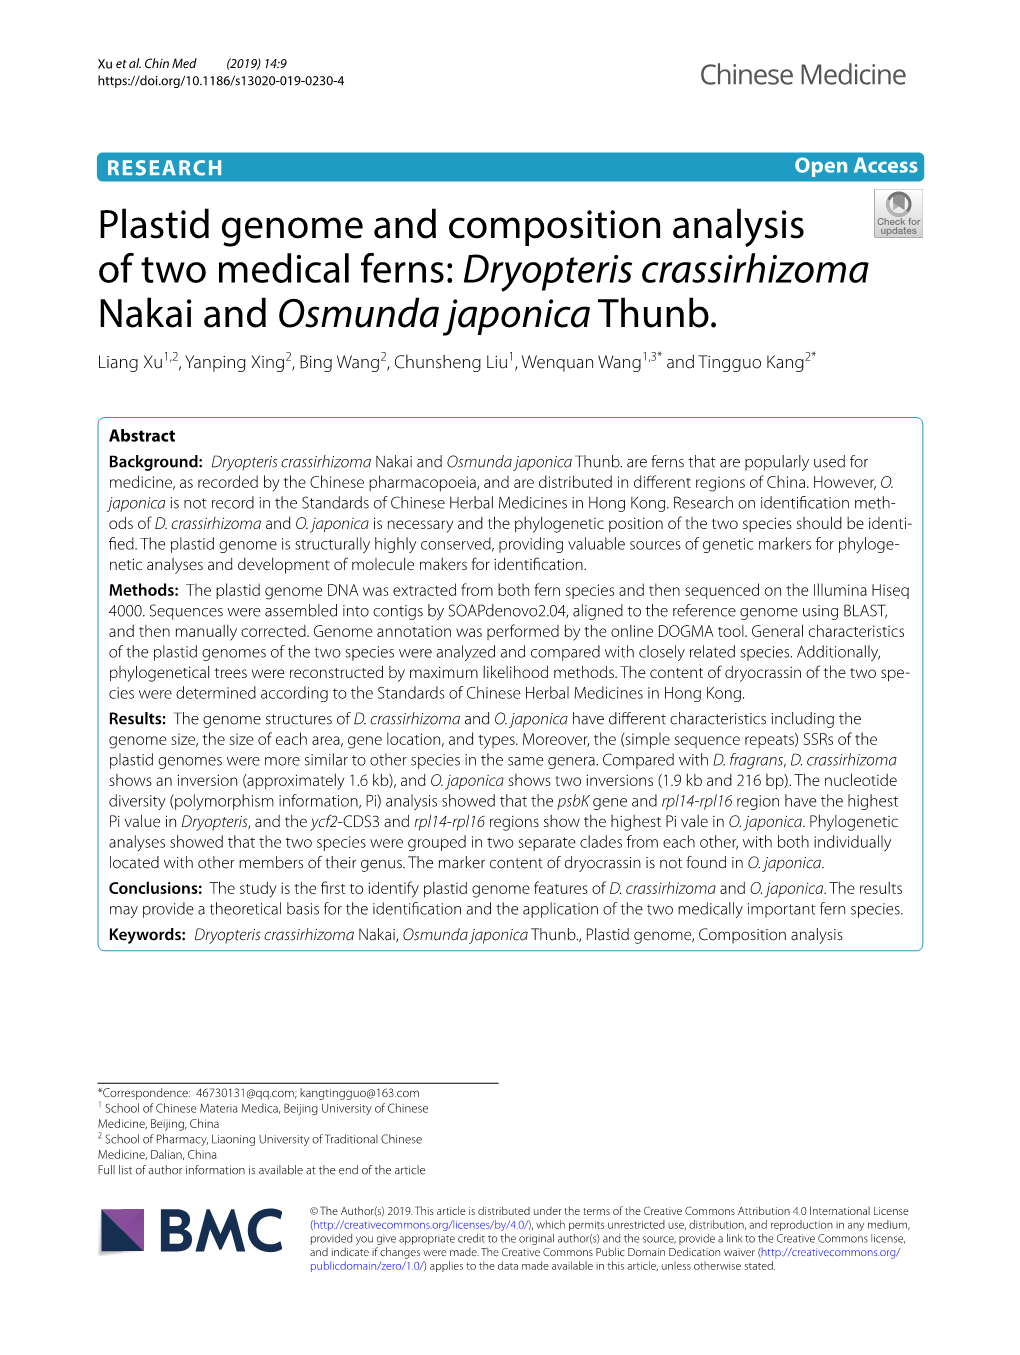 Plastid Genome and Composition Analysis of Two Medical Ferns: Dryopteris Crassirhizoma Nakai and Osmunda Japonica Thunb